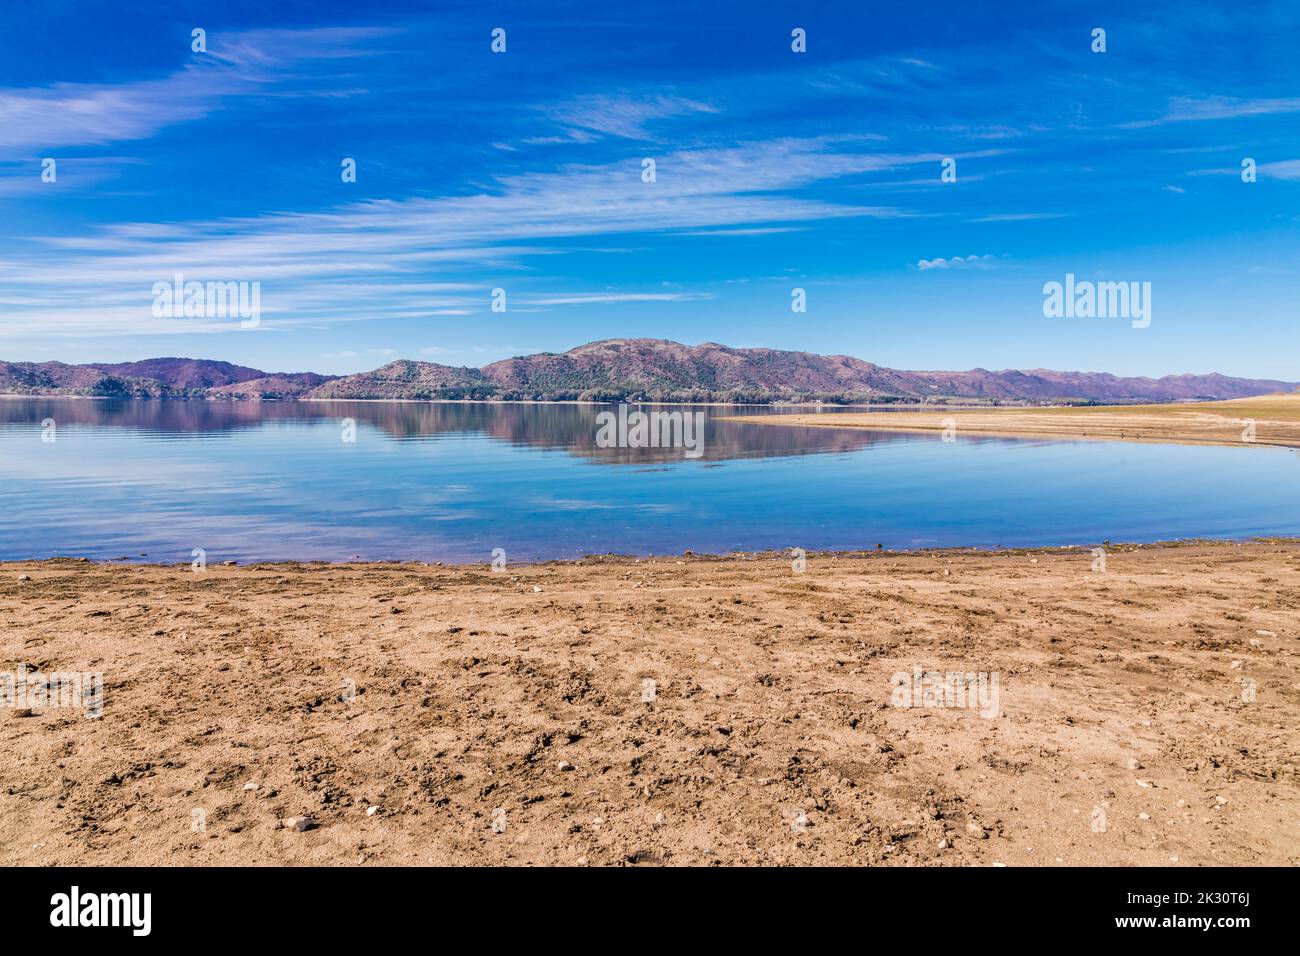 Argentina, Cordoba Province, Potrero de Garay, Shore of Los Molinos Lake with hills in background Stock Photo